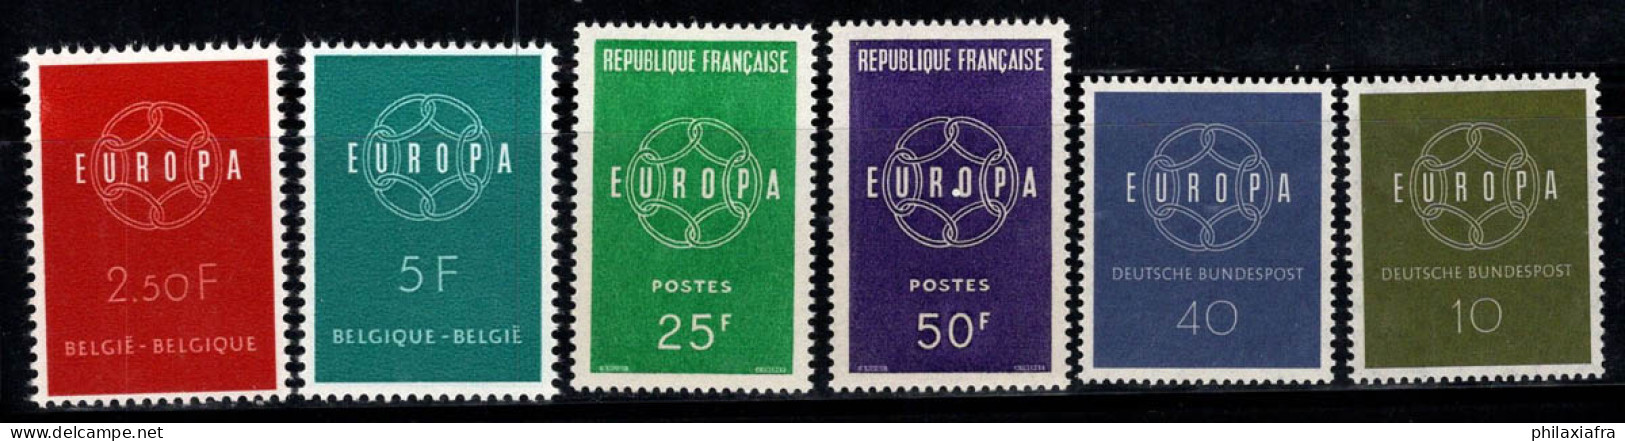 Europe CEPT 1959 Neuf ** 100% France, Belgique - 1959